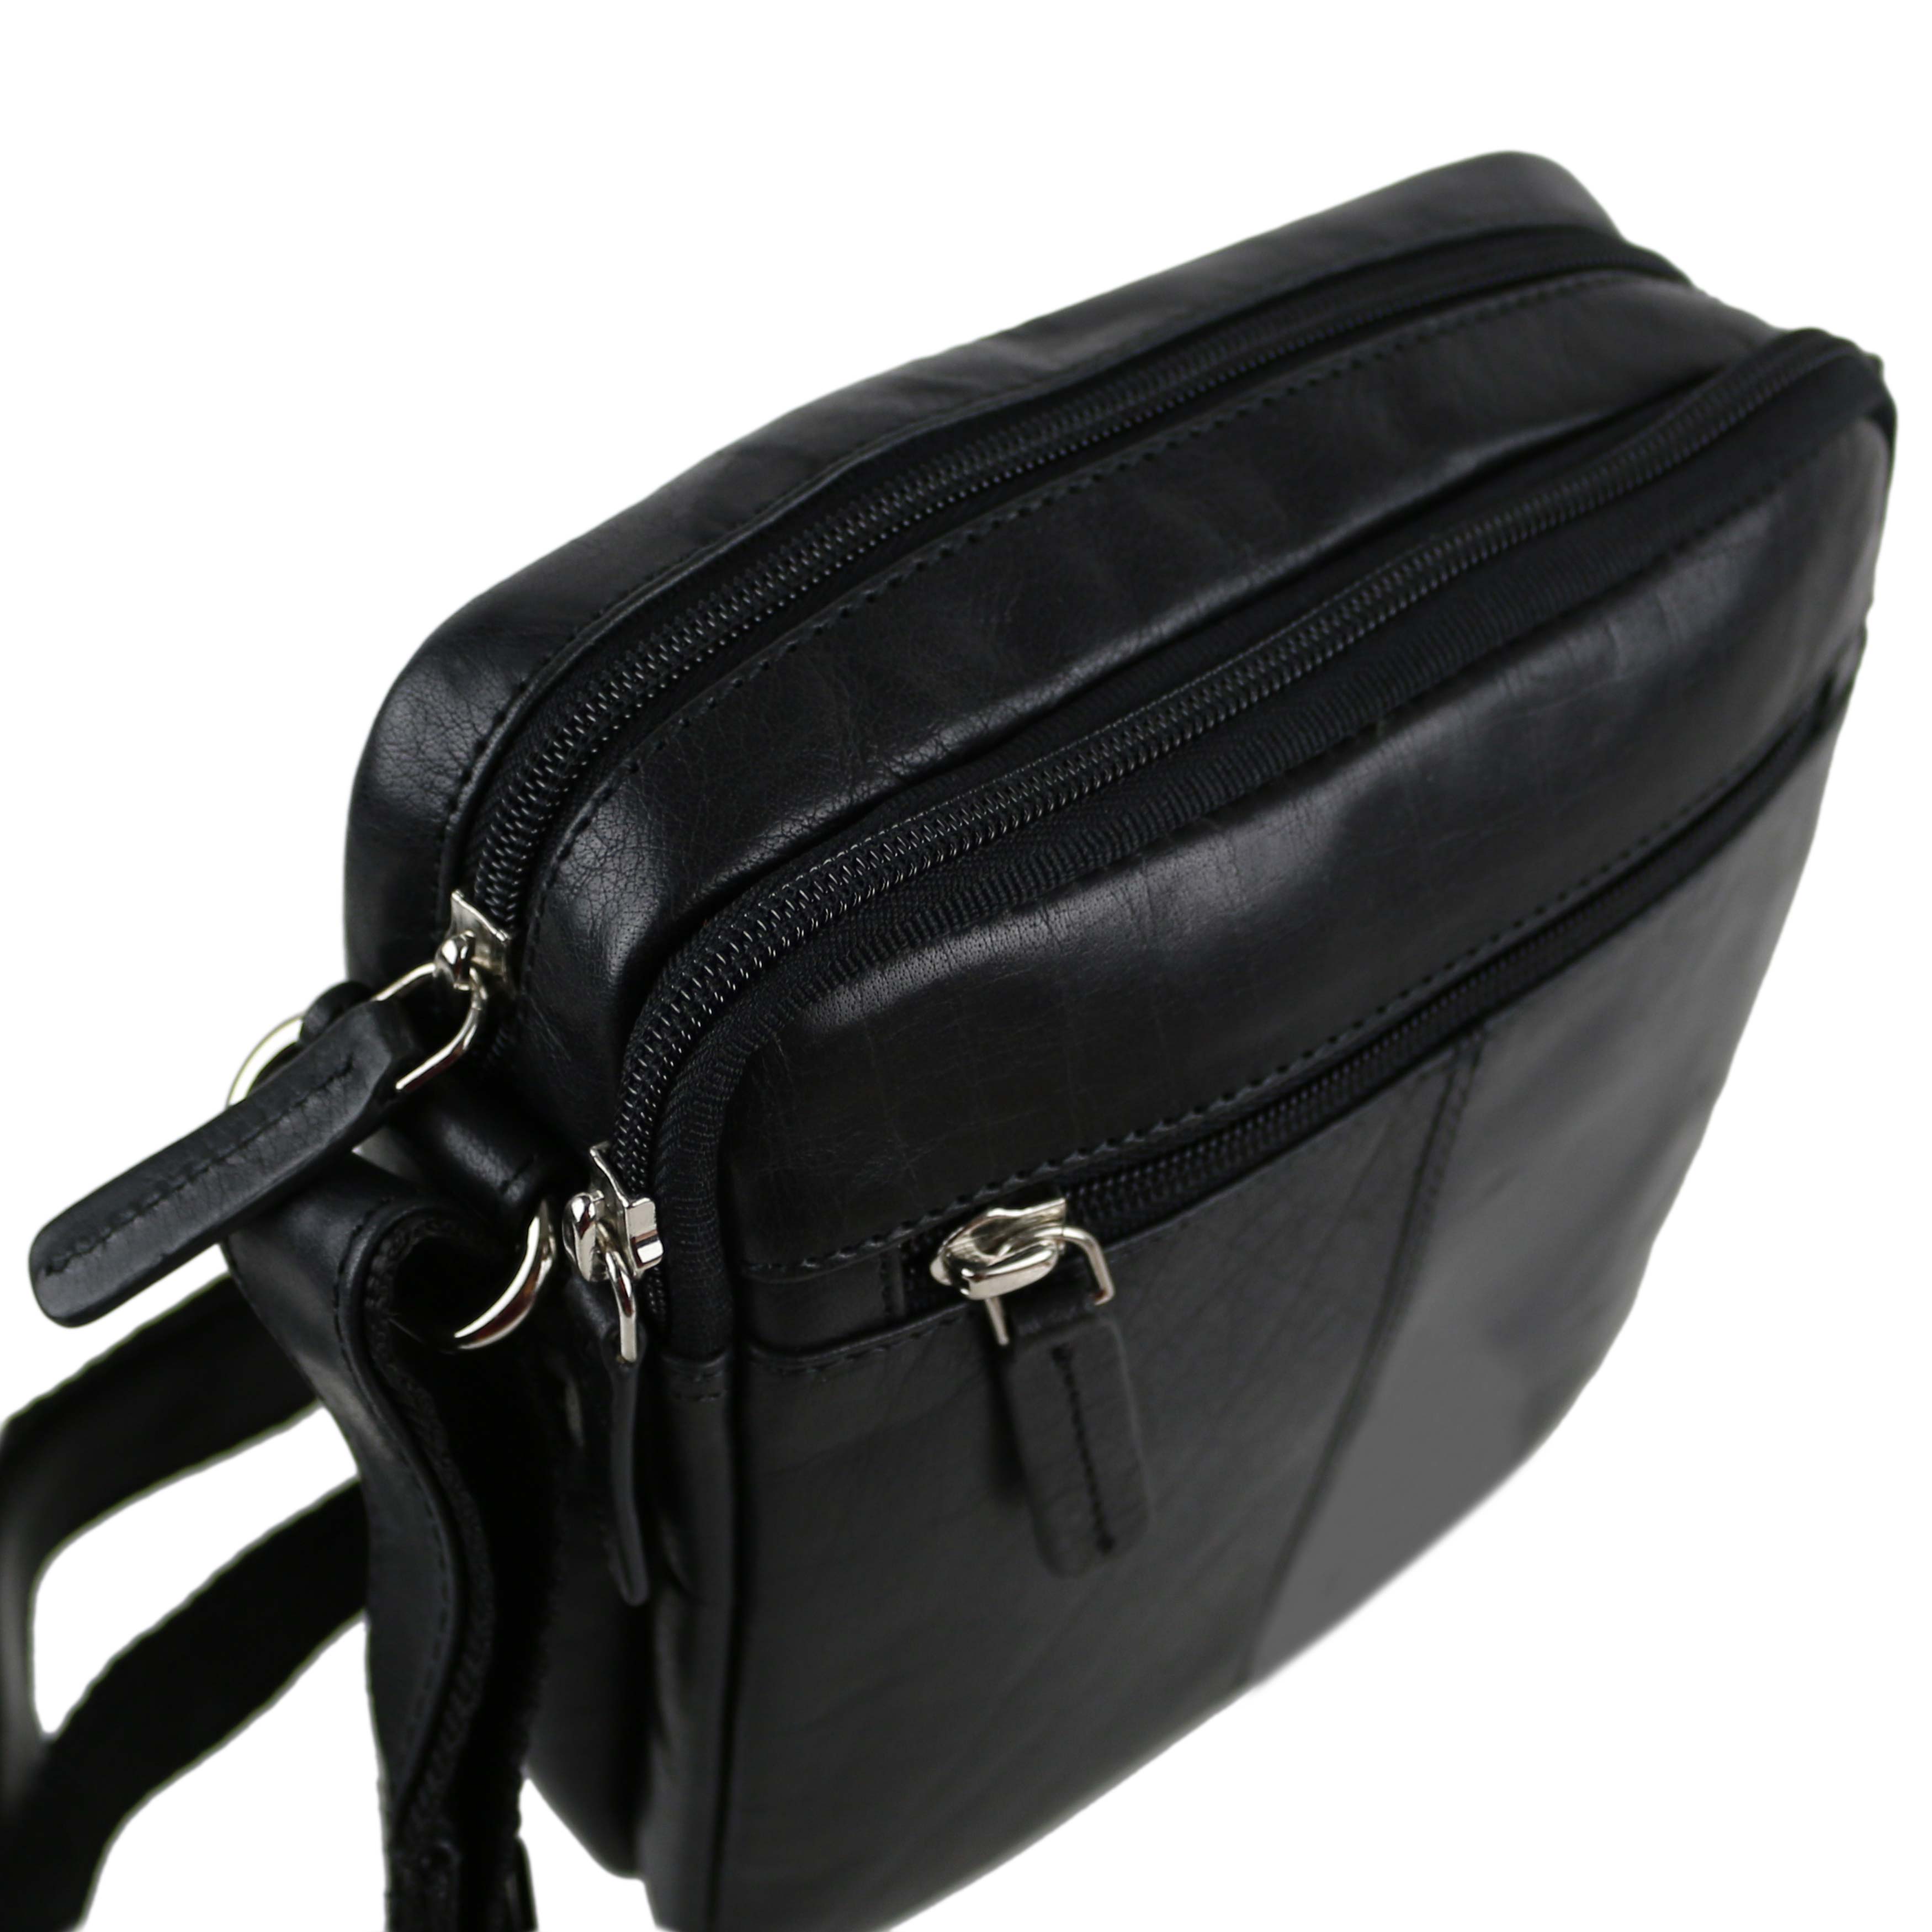 Ladies Mens Small Leather Cross Body Bag by Visconti; Merlin Travel | eBay